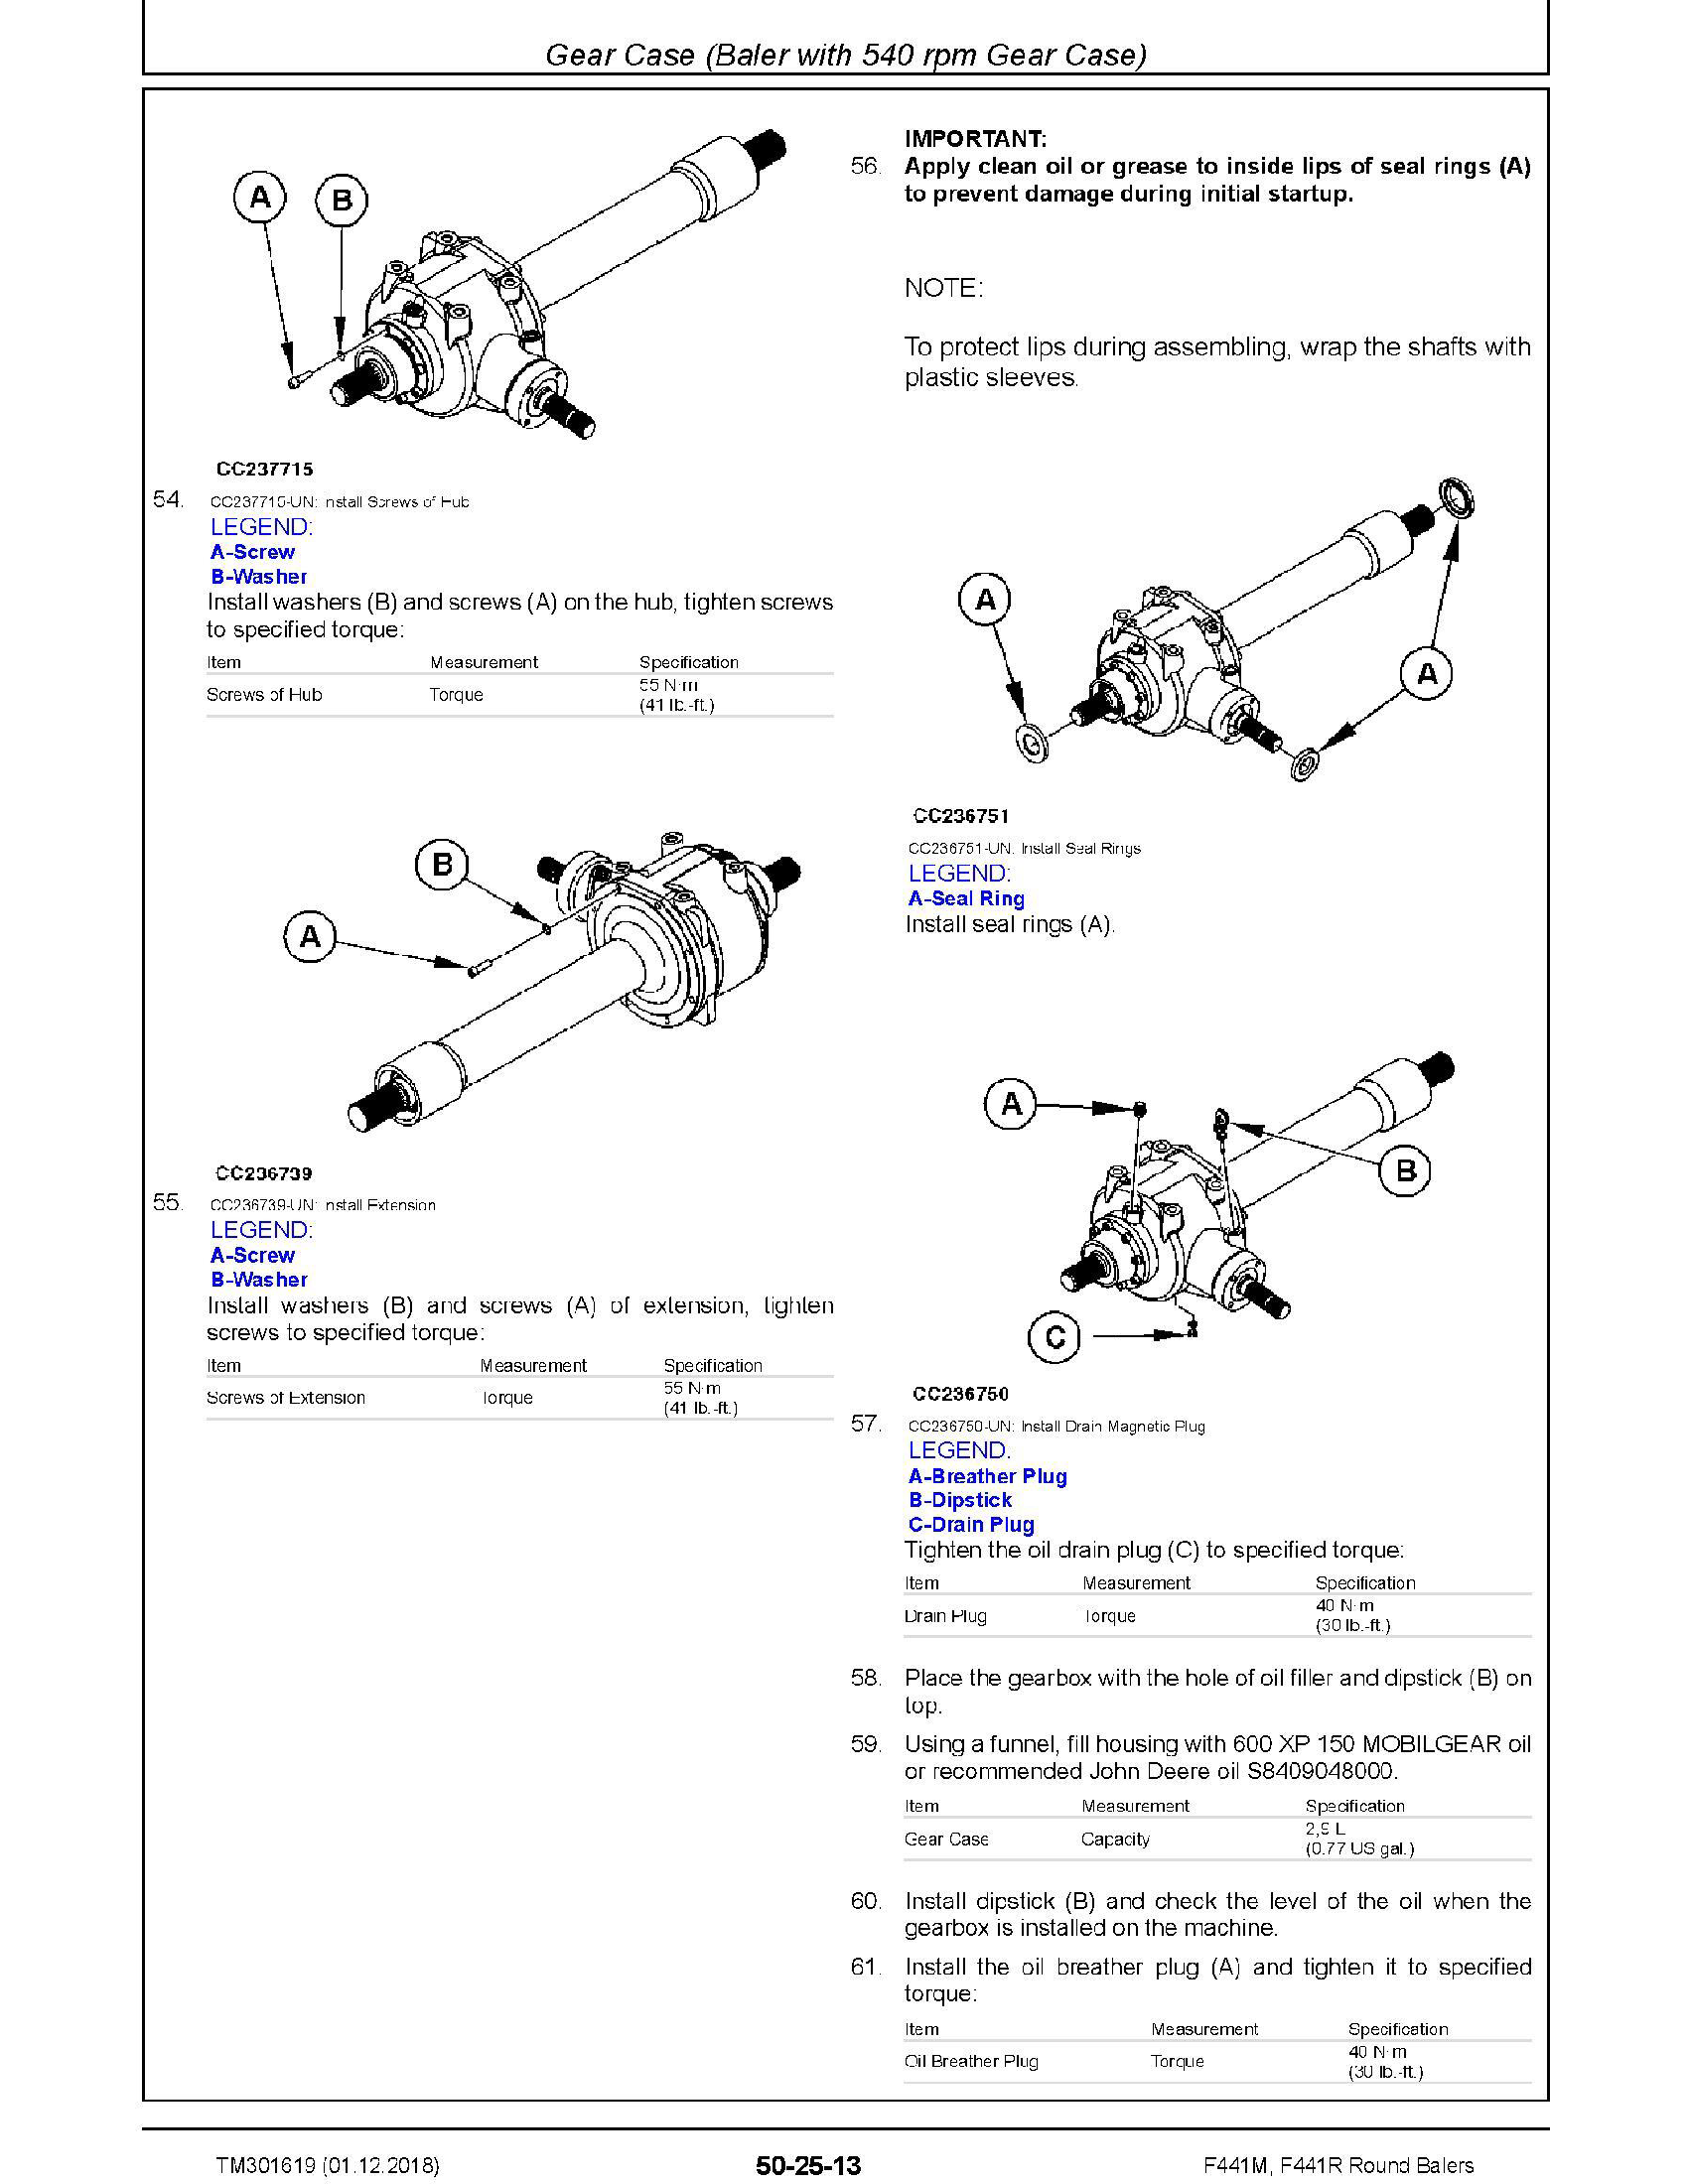 John Deere 745FD manual pdf